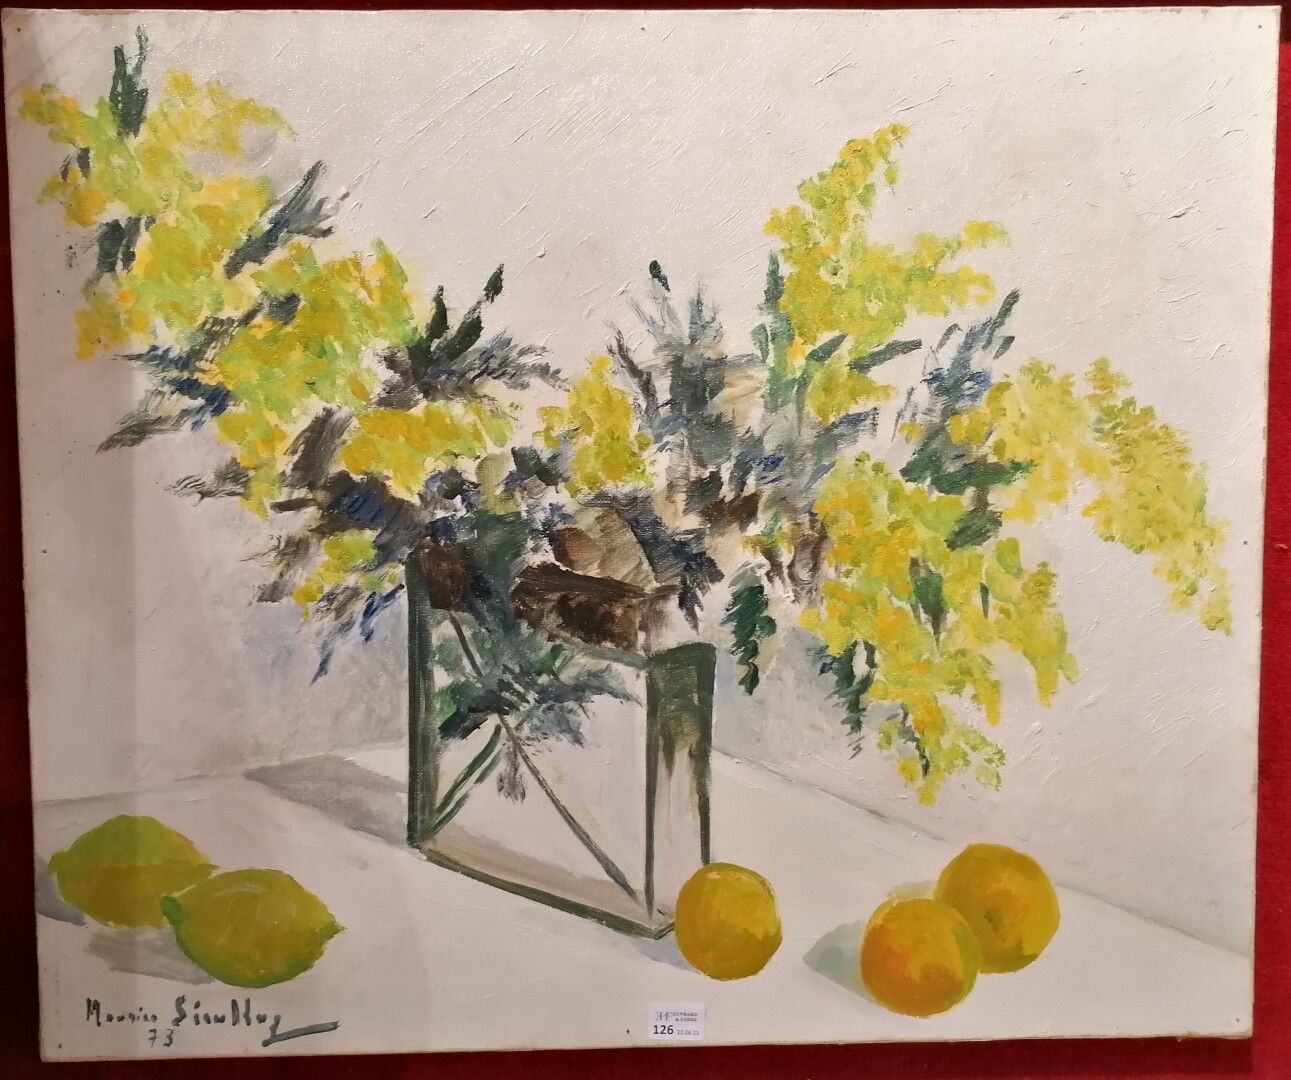 Null Maurice SERULLAZ (1914-1997)

Bodegón con limón y mimosas

Óleo sobre lienz&hellip;